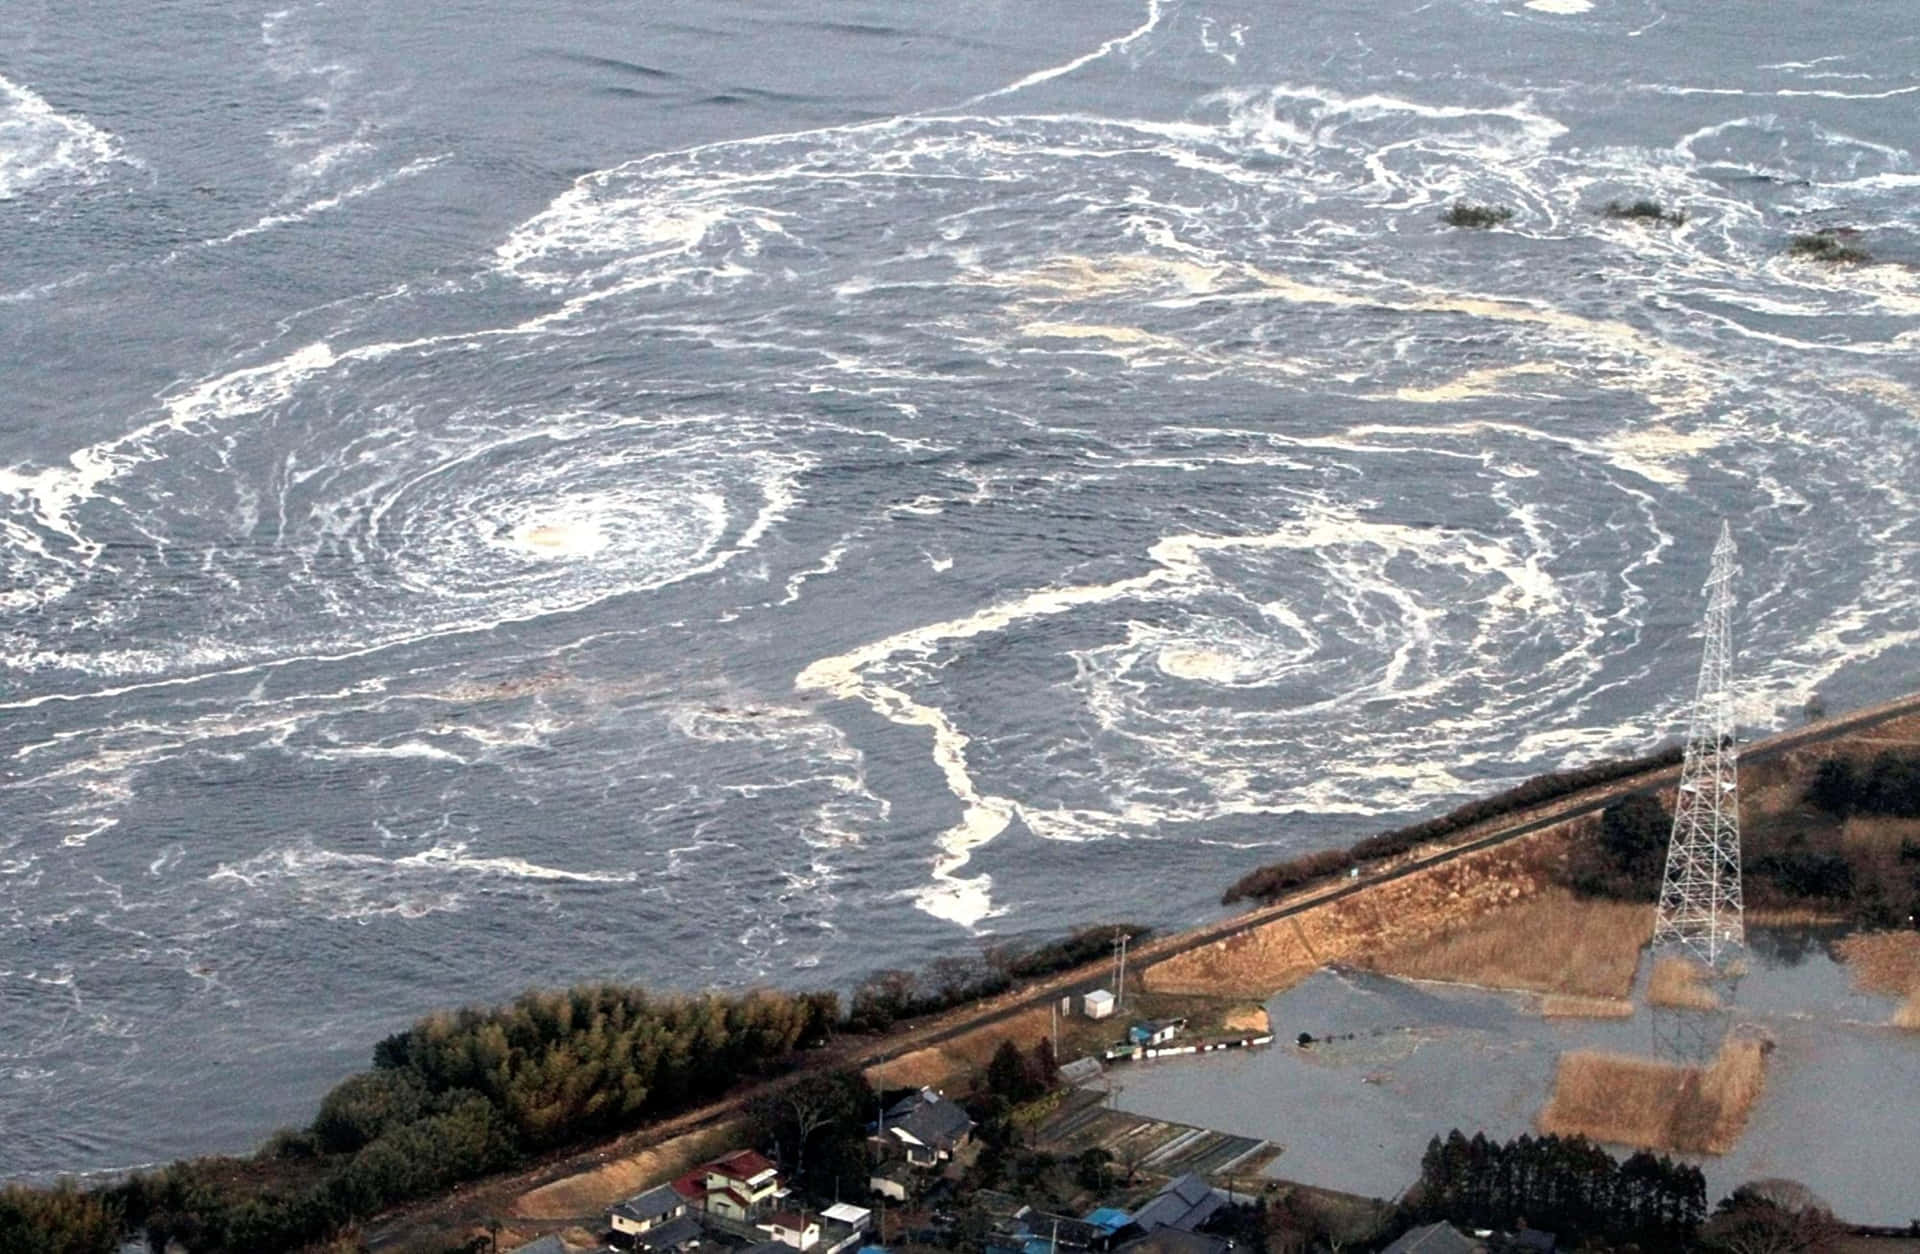 Aftermath of a Tsunami